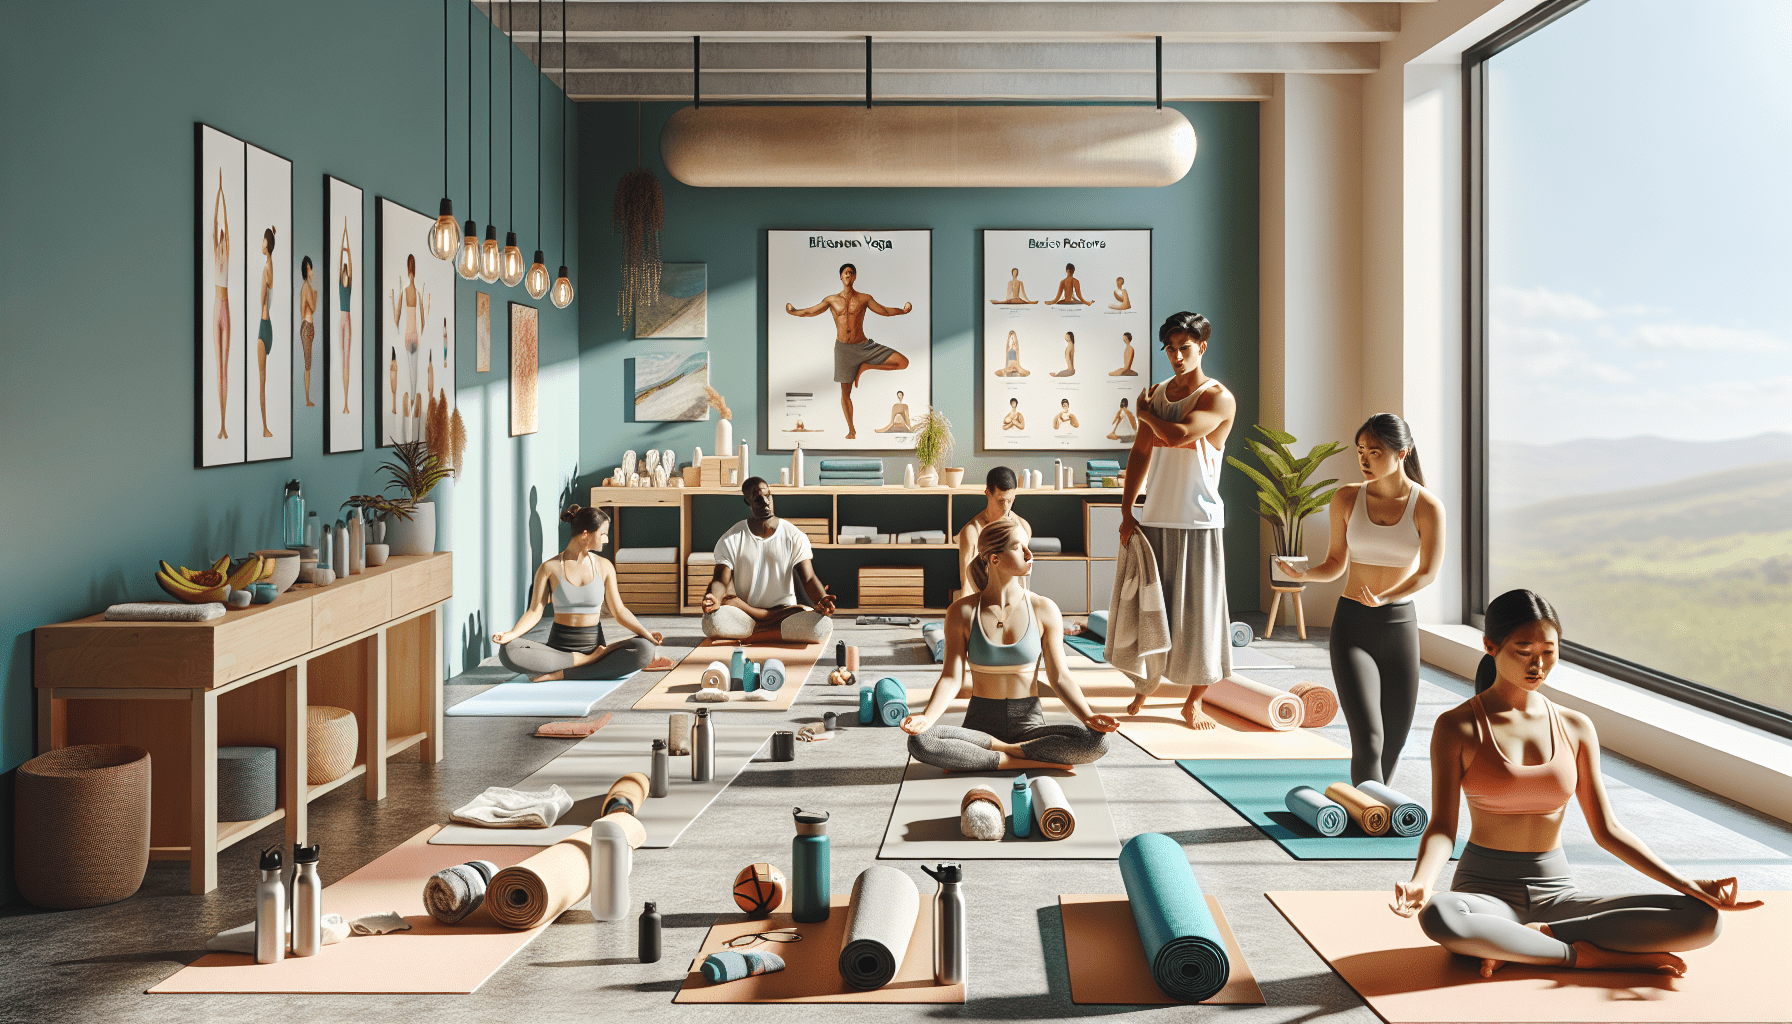 Finding The Best Bikram Yoga Studios Near You